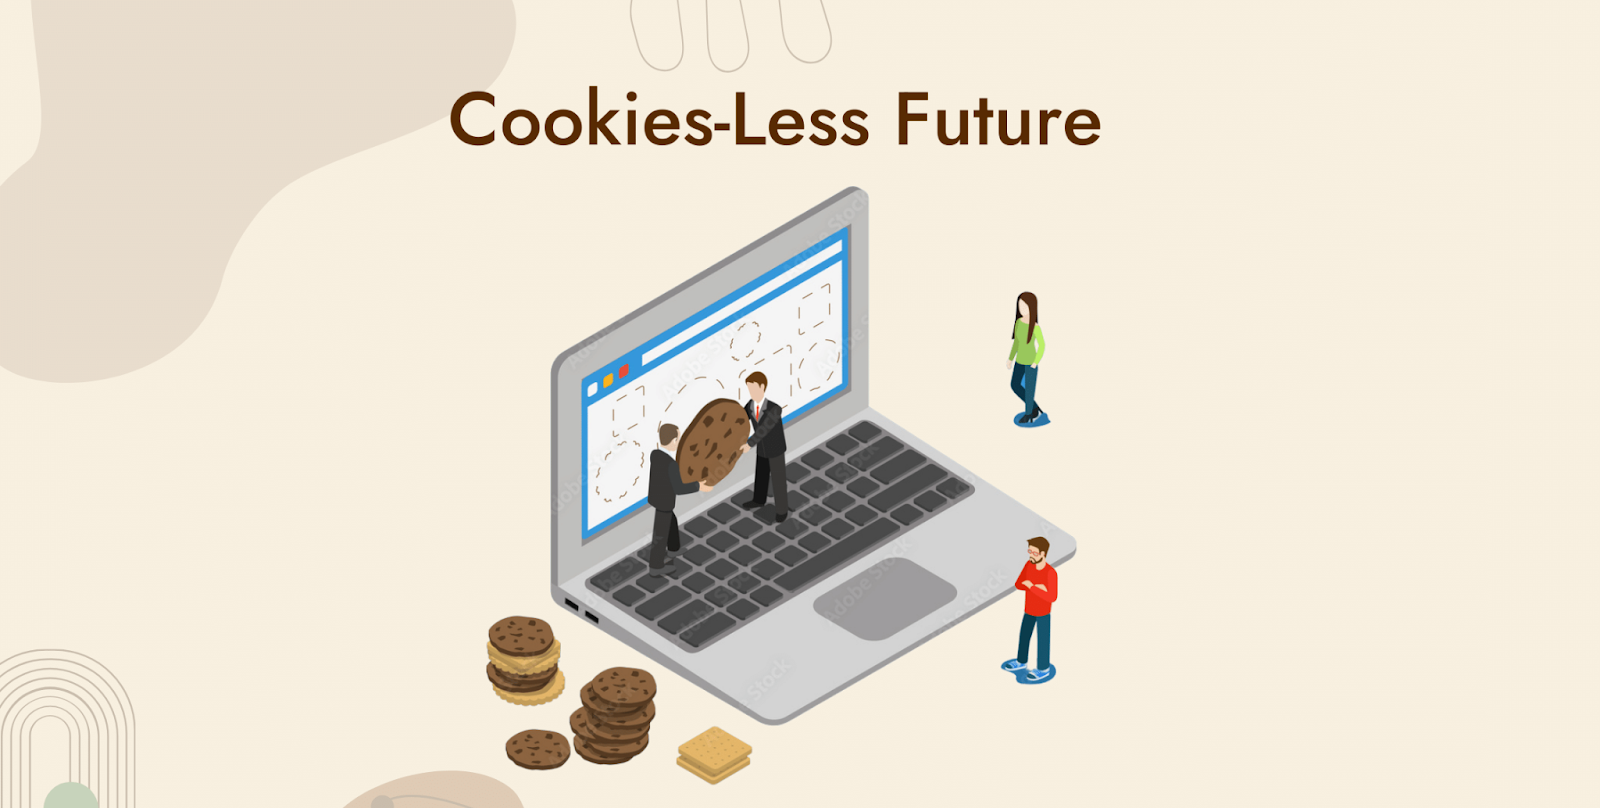 Cookie-less Future